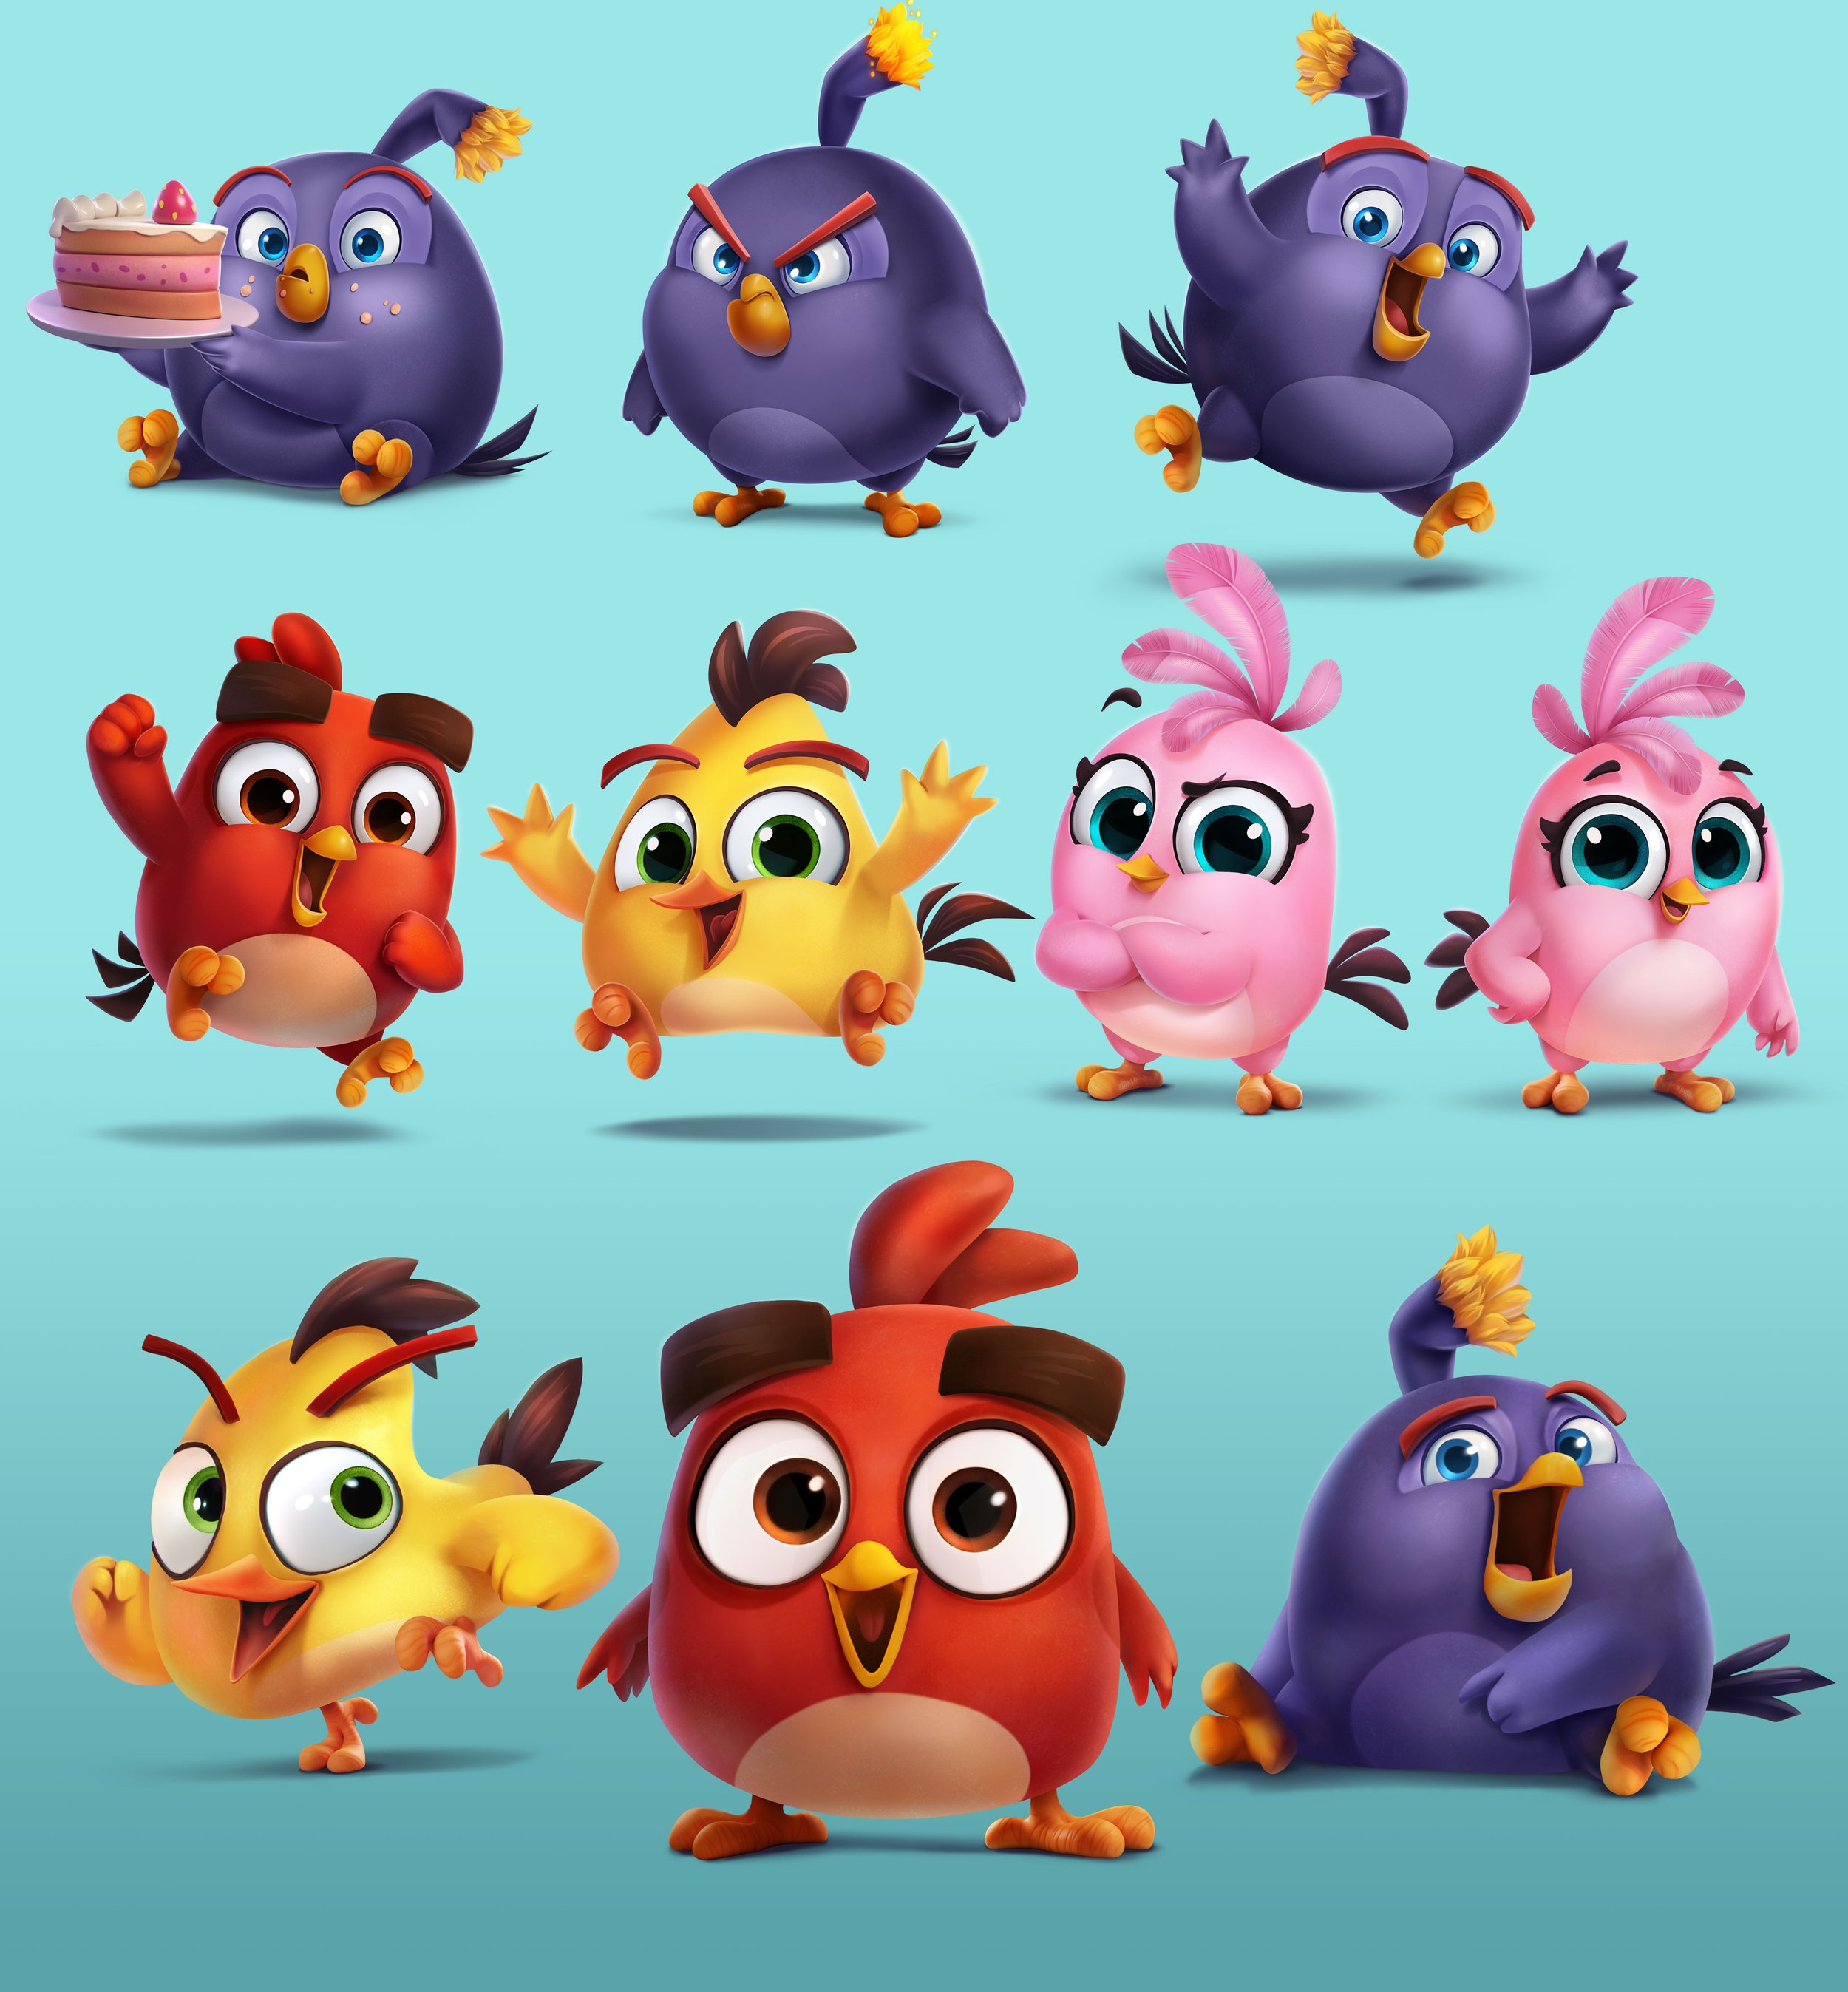 Angry Birds Dreamblast, marketing characters